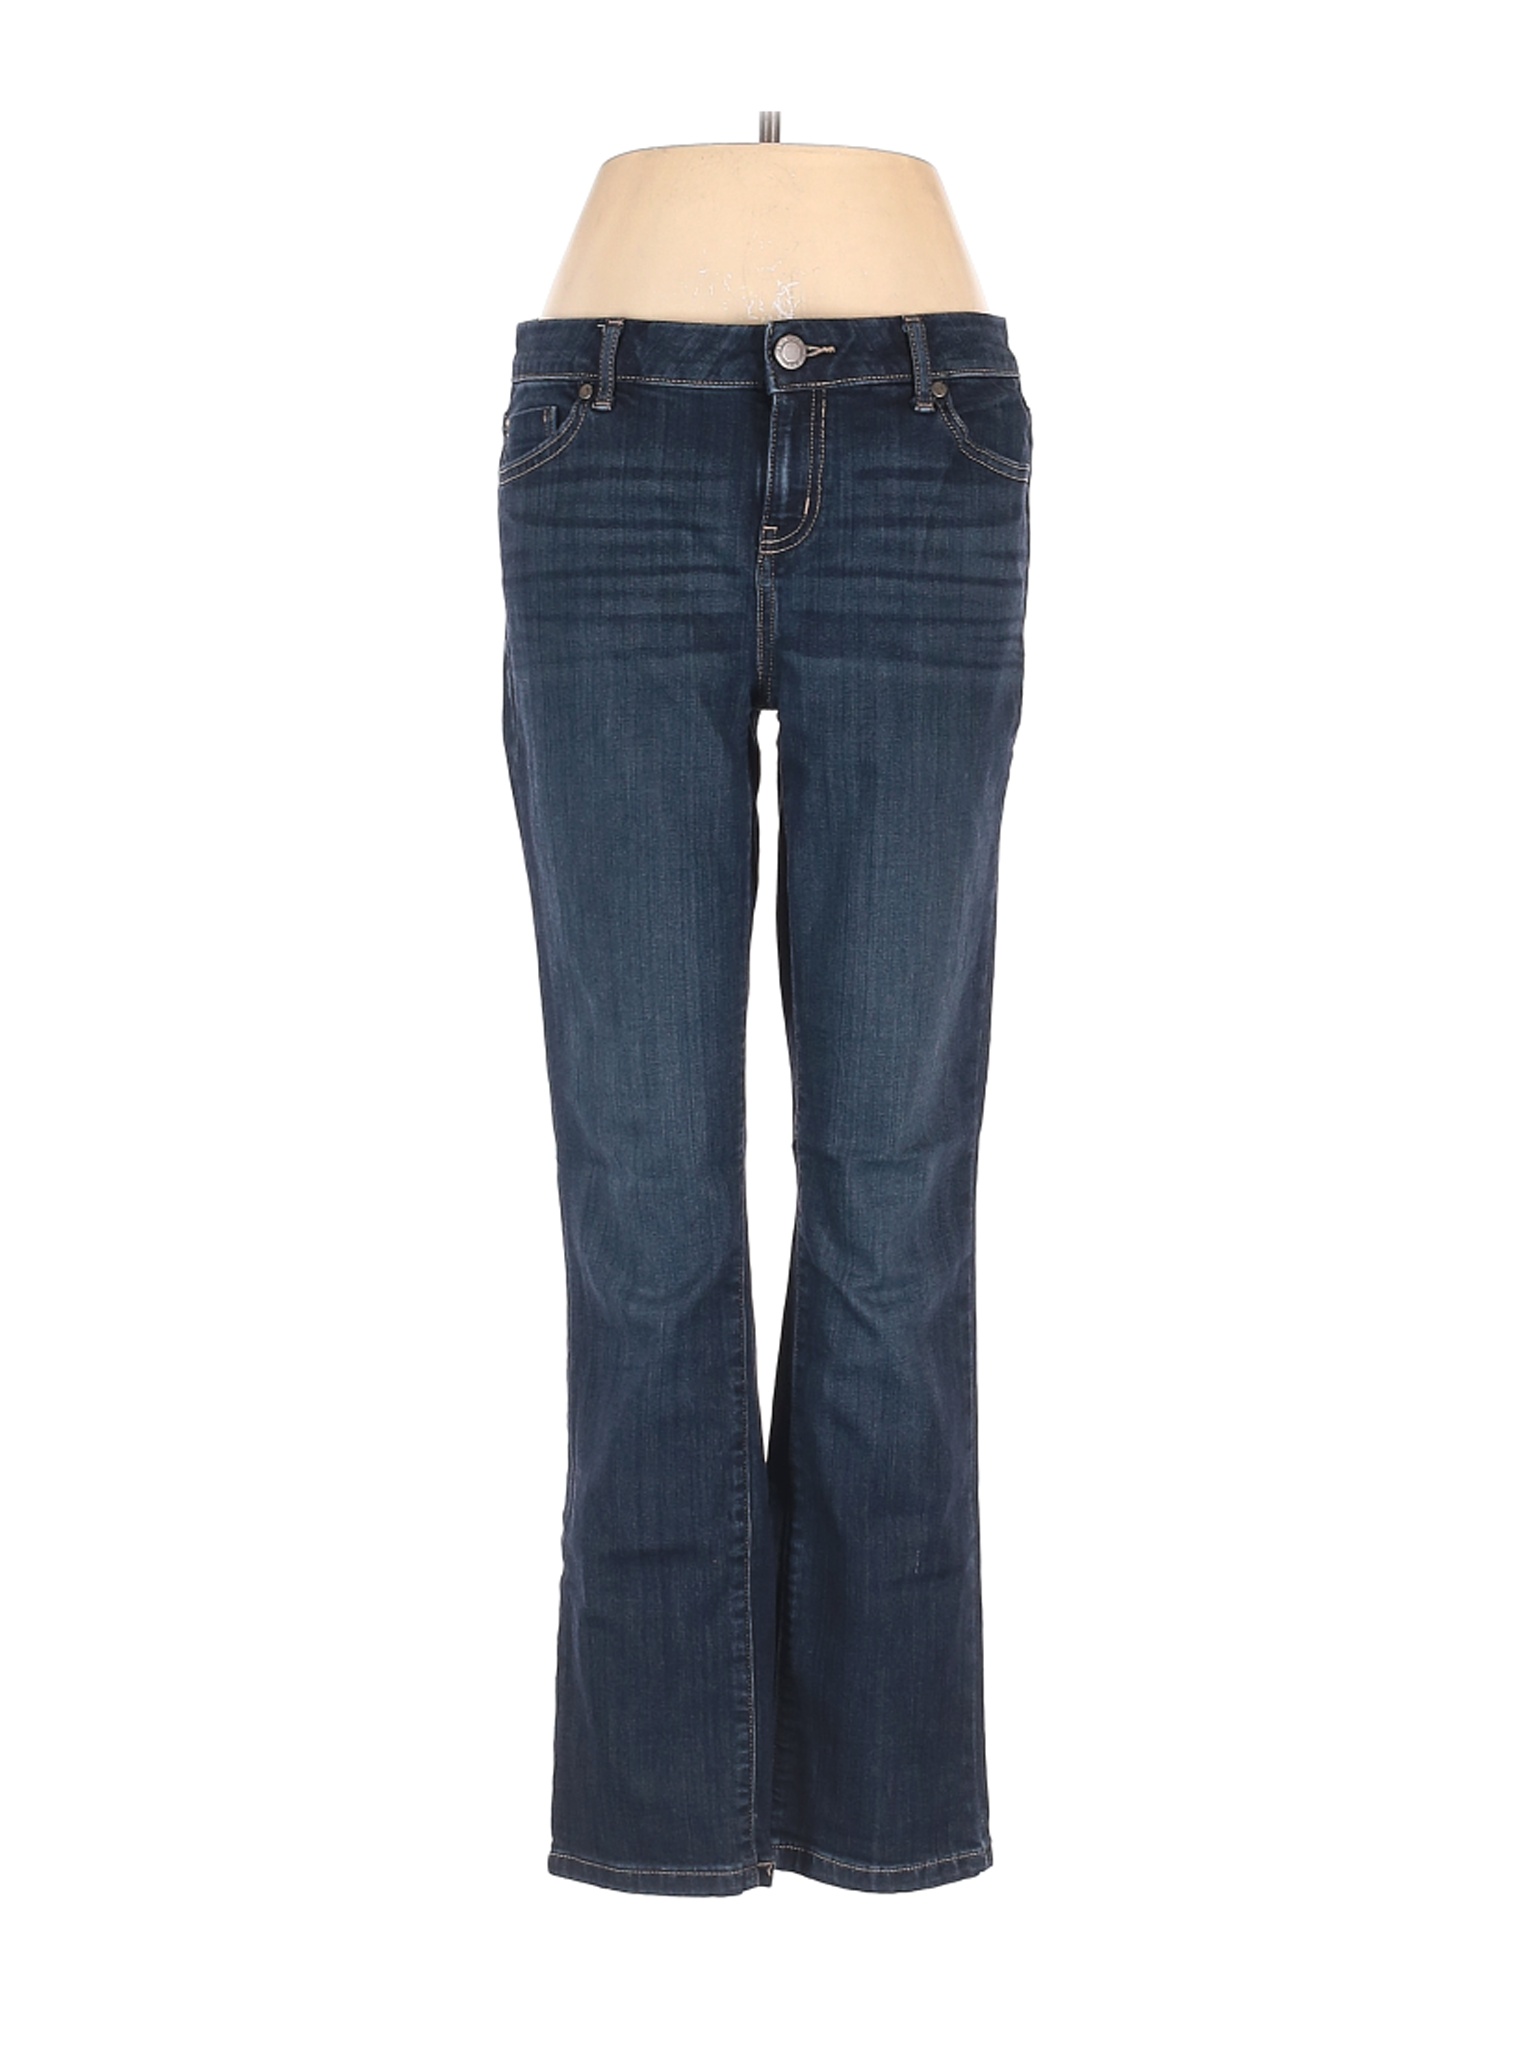 Simply Vera Vera Wang Women Blue Jeans 6 | eBay